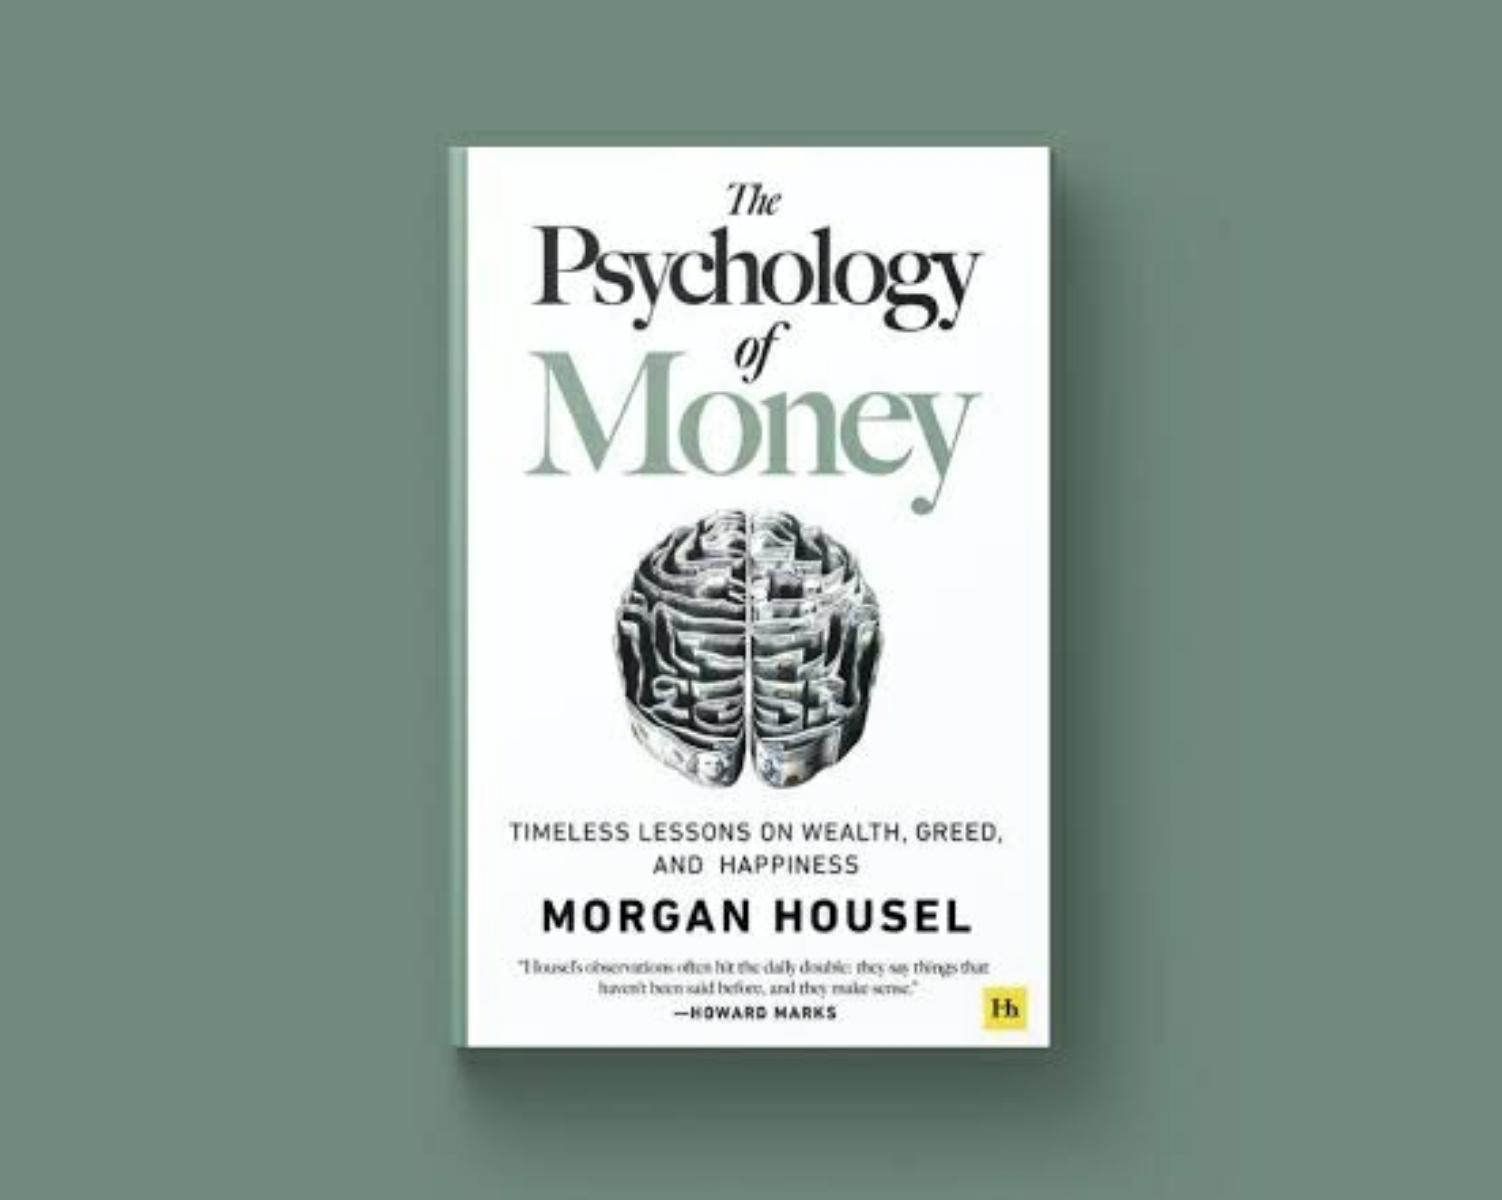 -MORGAN HOUSEL, THE PSYCHOLOGY OF MONEY